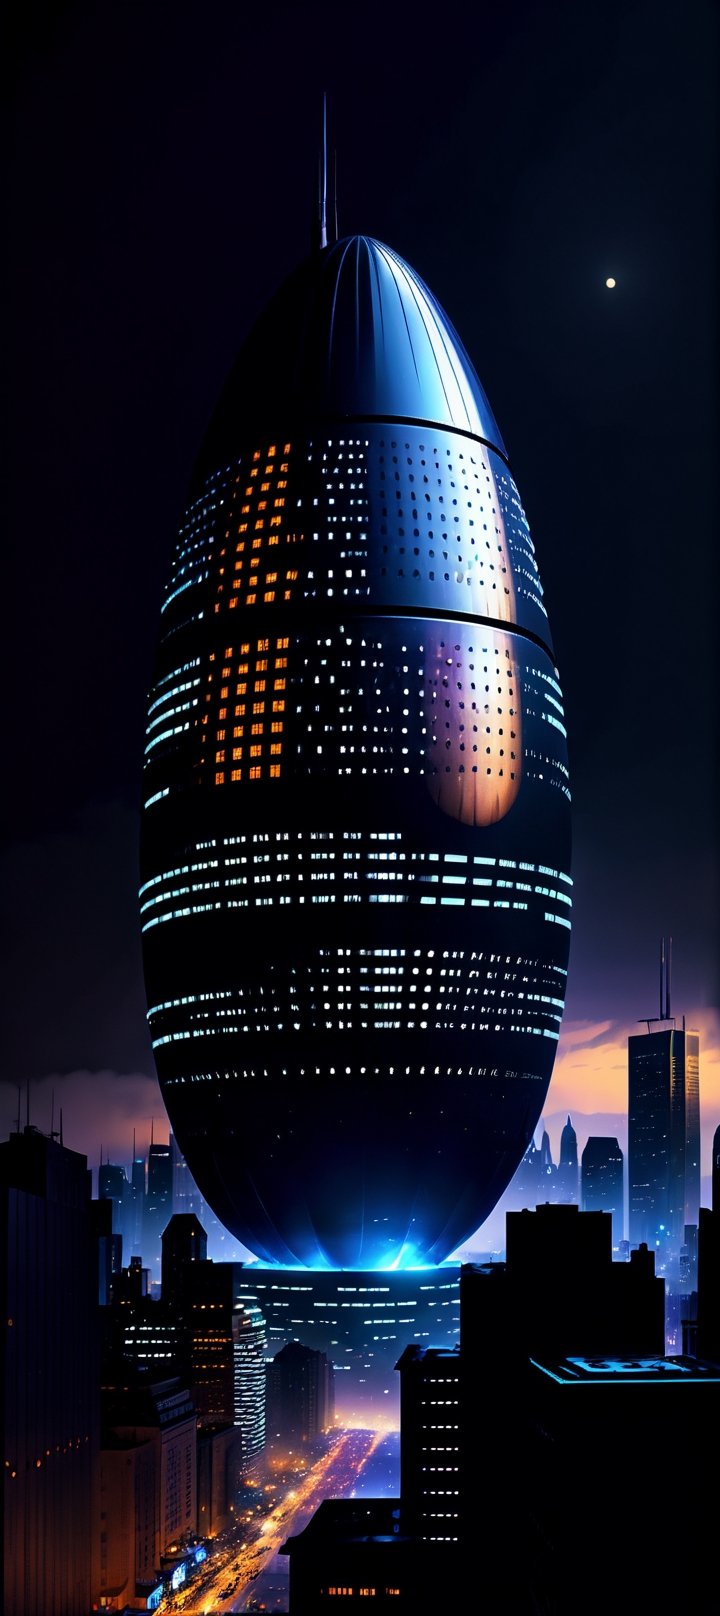 Dark Gerkin egg shaped Skyscraper towering above SciFi cityscape, Cyberpunk, (midnight:1.4), realistic, cinematic lighting, 